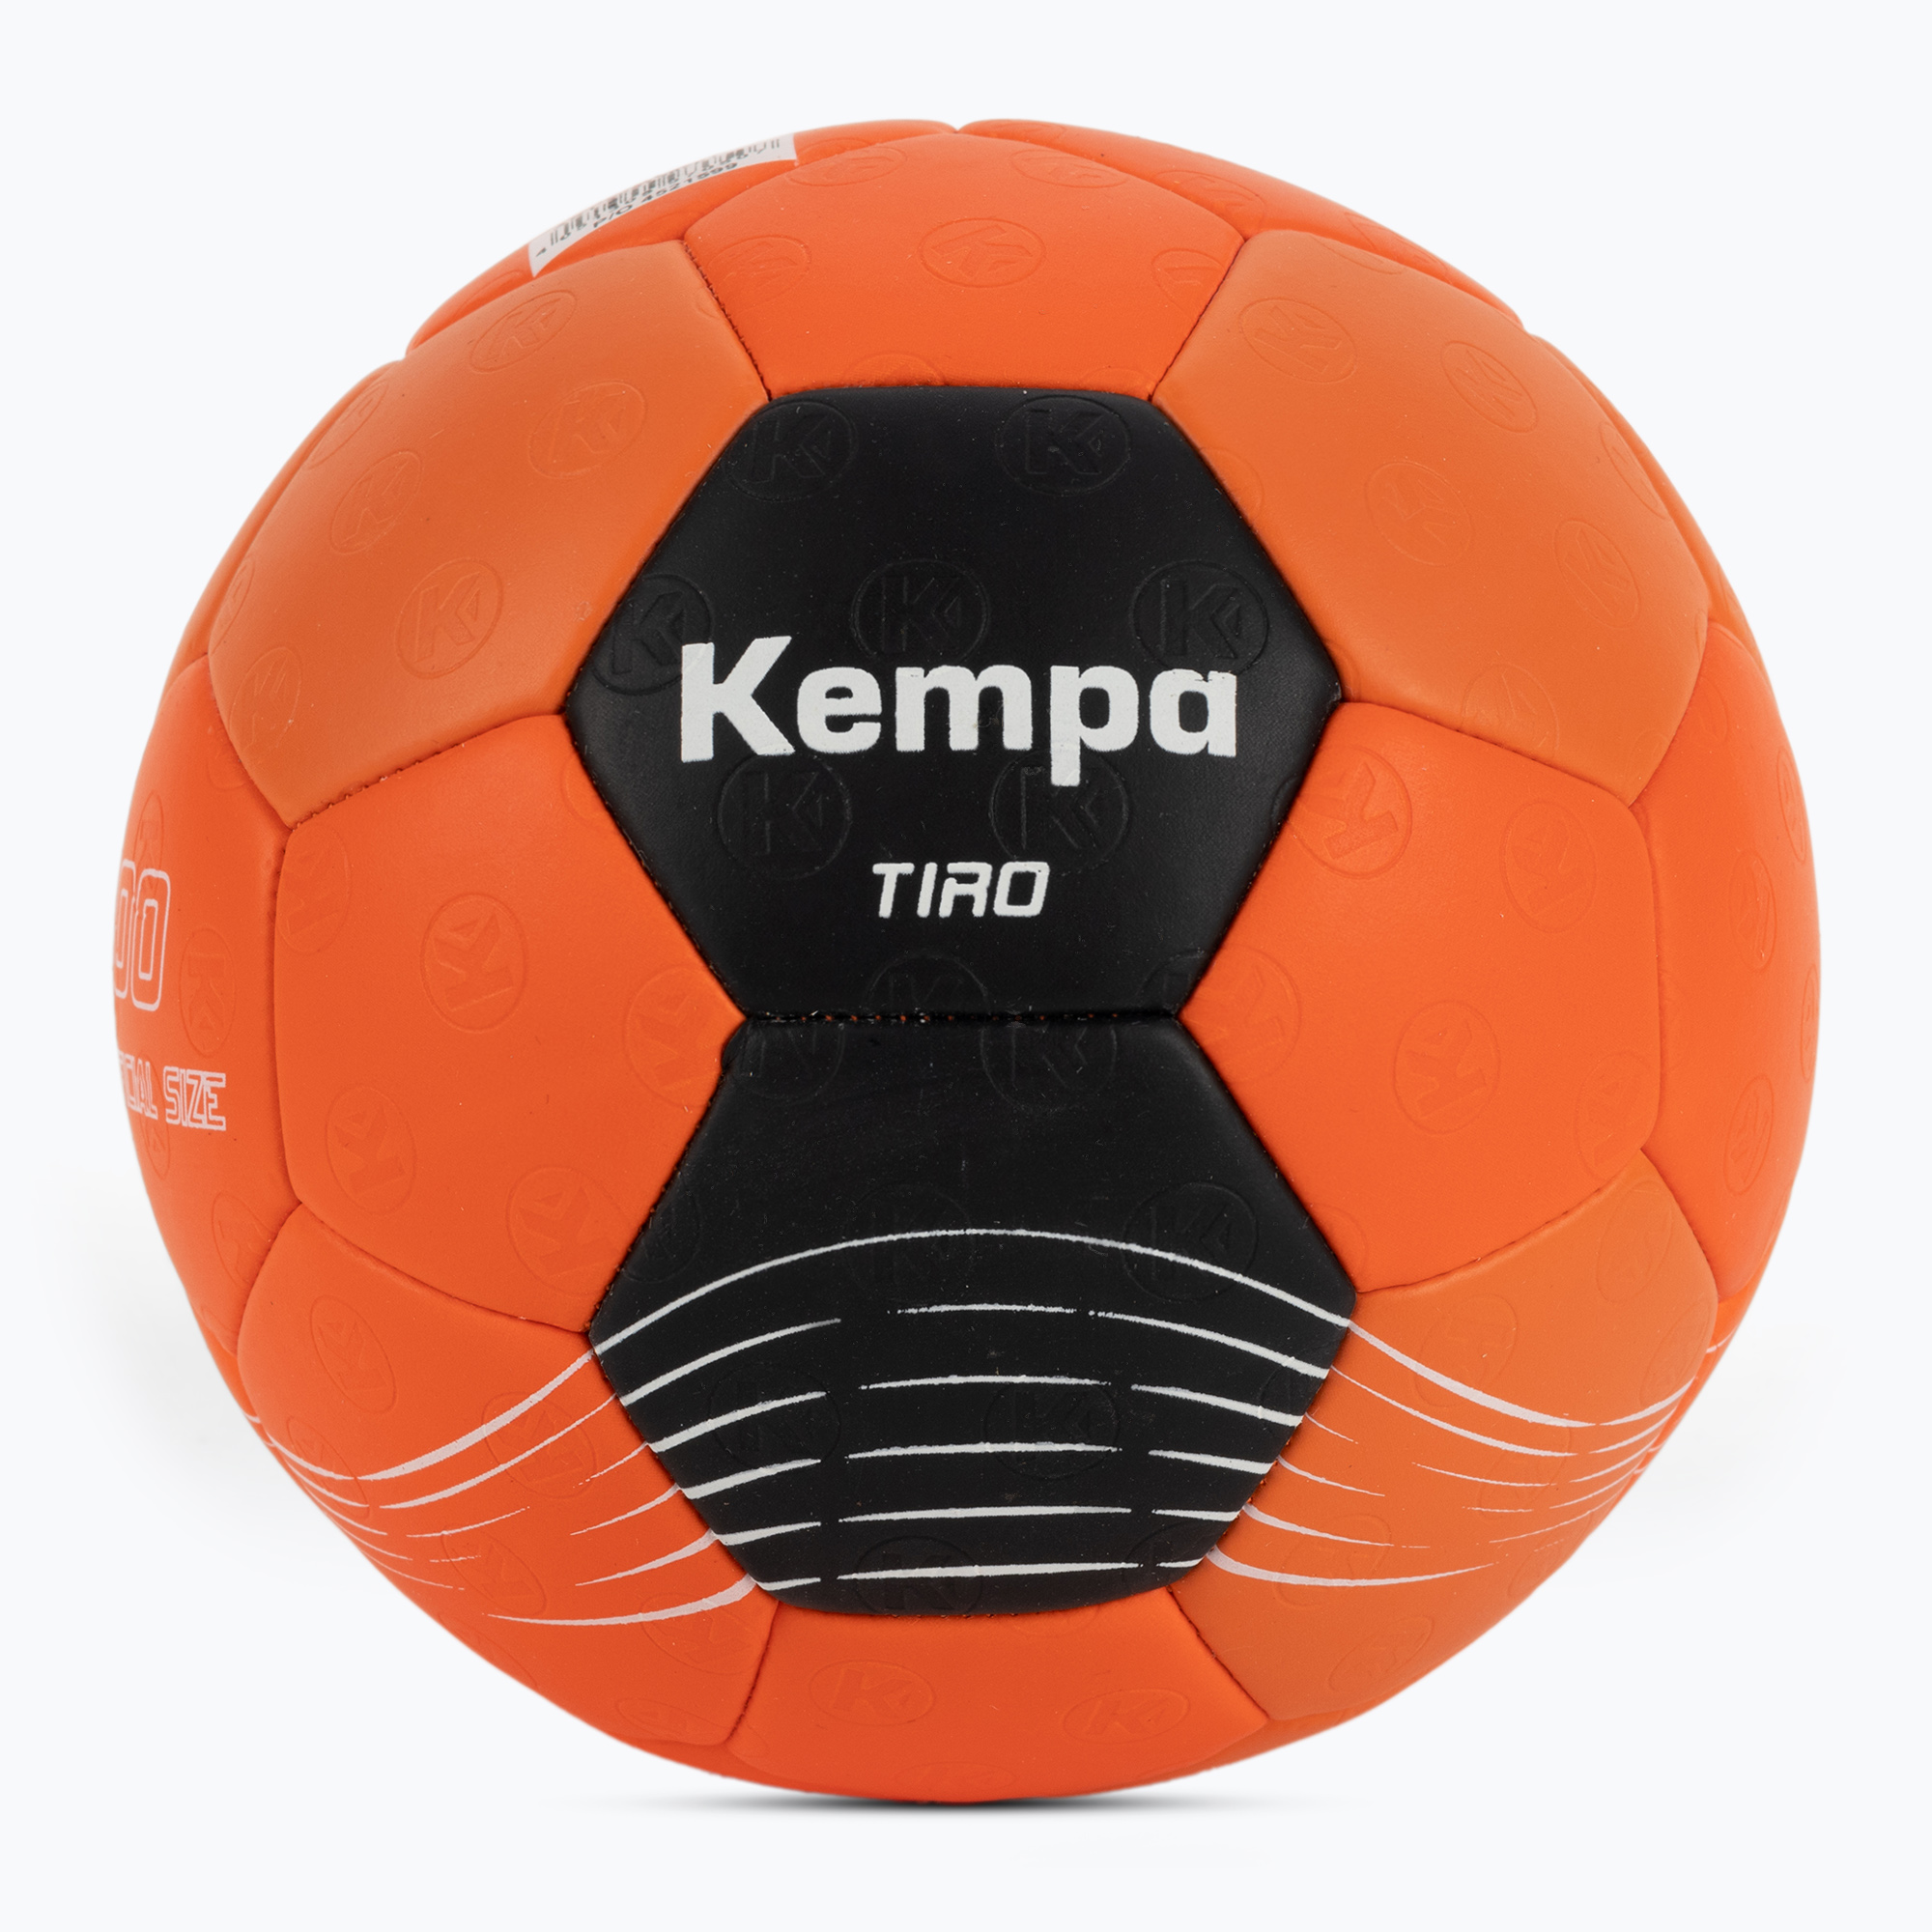 Kempa Tiro handball 200190801/00 veľkosť 0